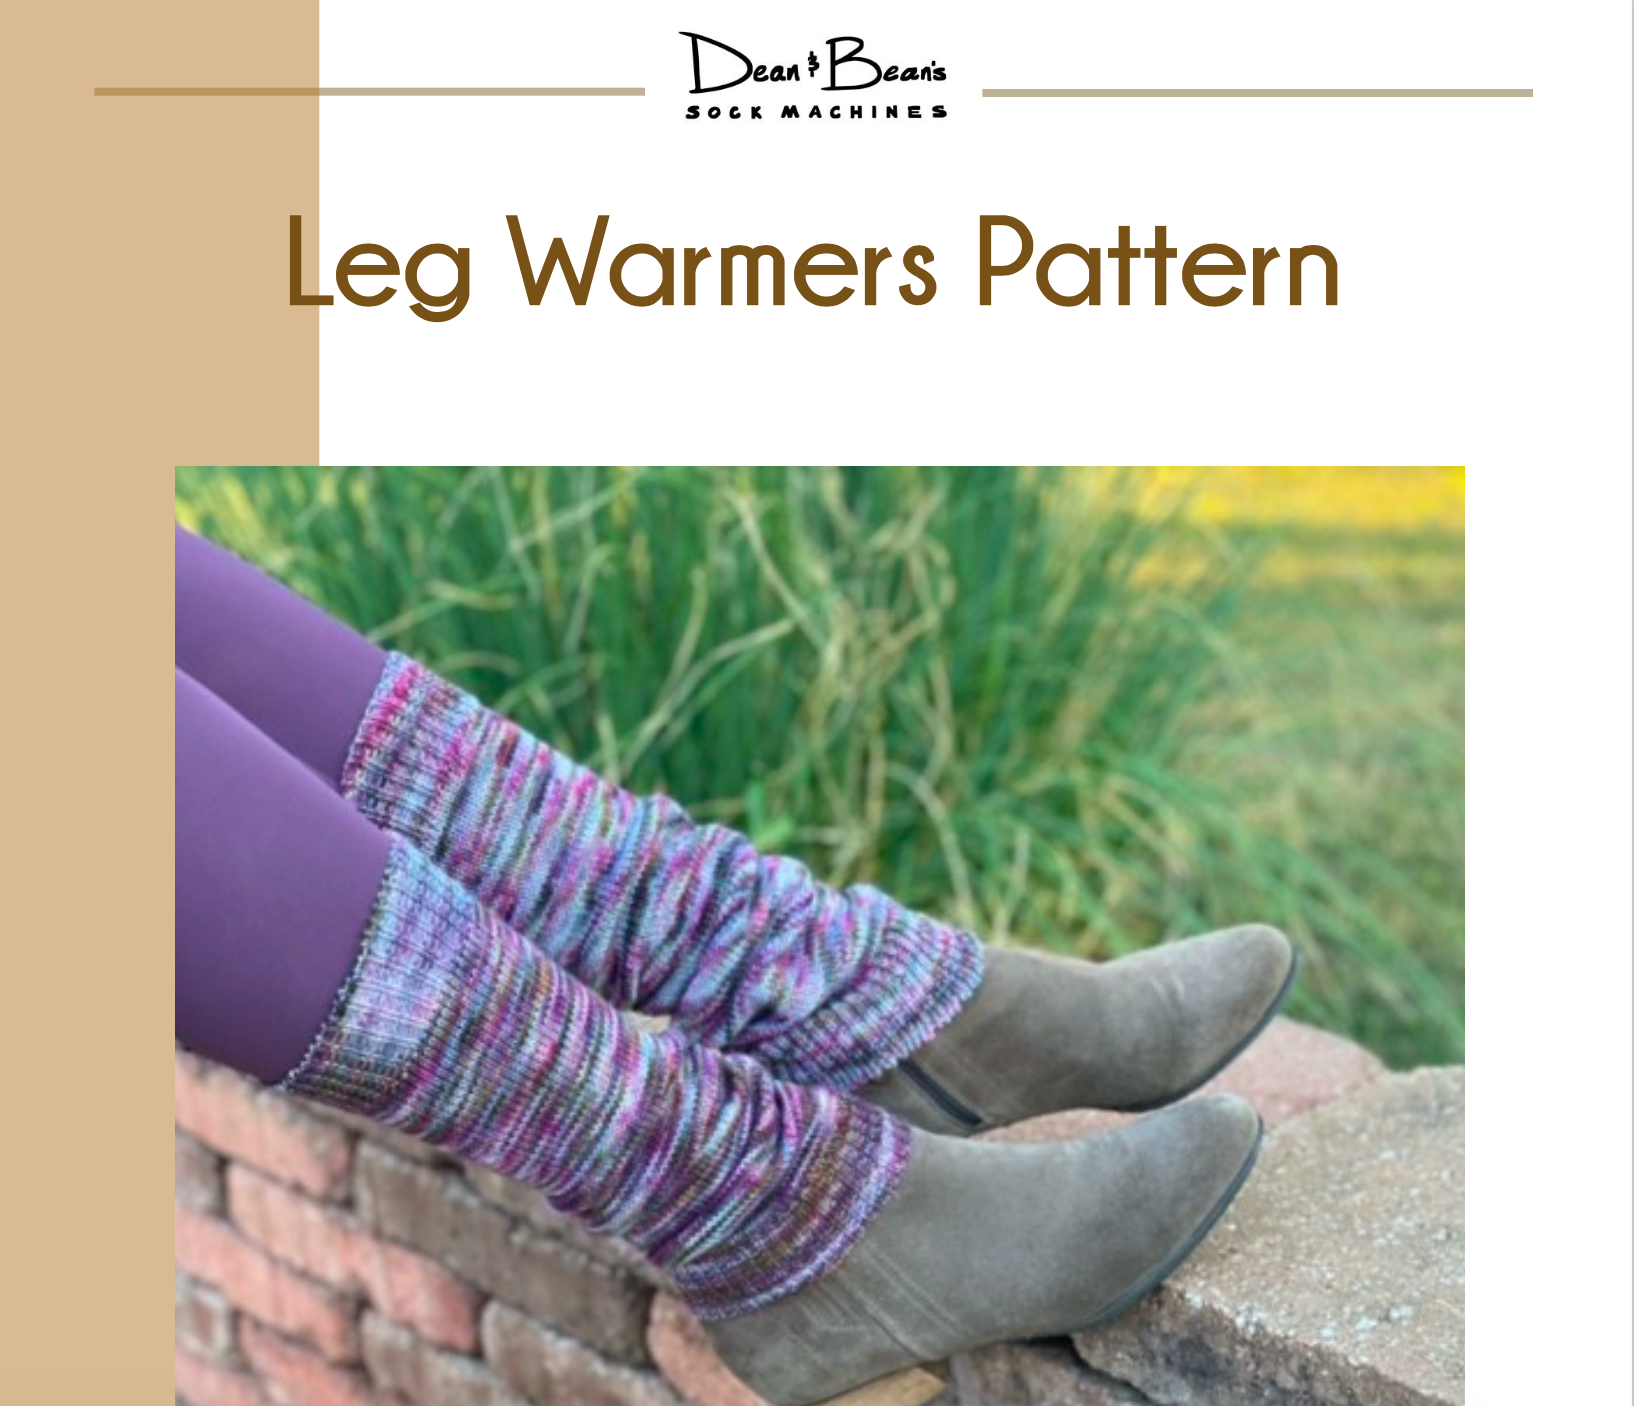 Leg Warmers Pattern  Dean and Bean's Sock Machines